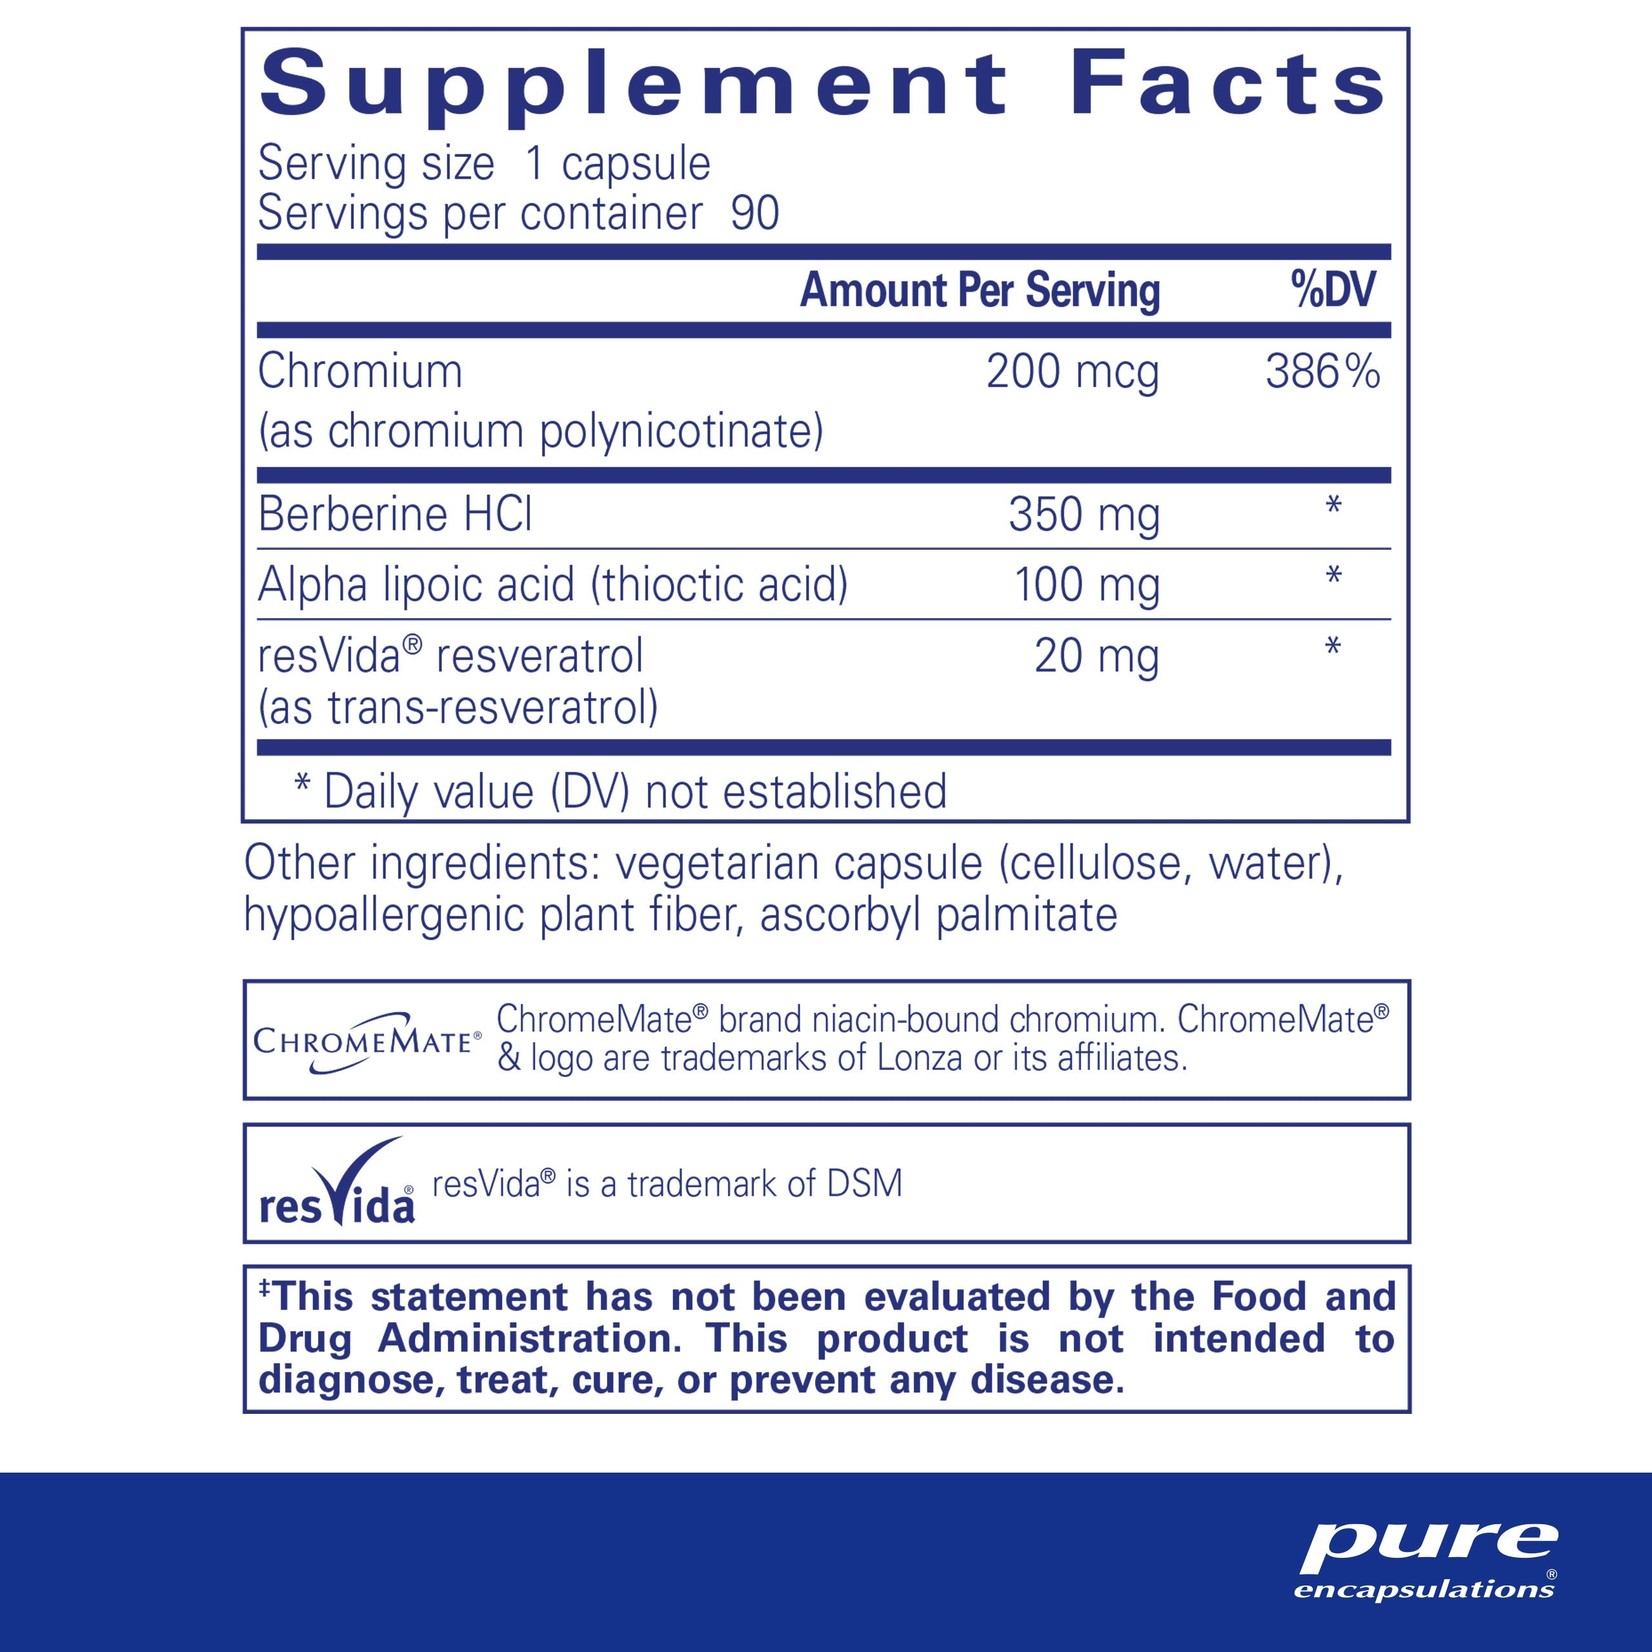 Pure Encapsulations Pure Encapsulations - Metabolic Xtra - 90 Capsules